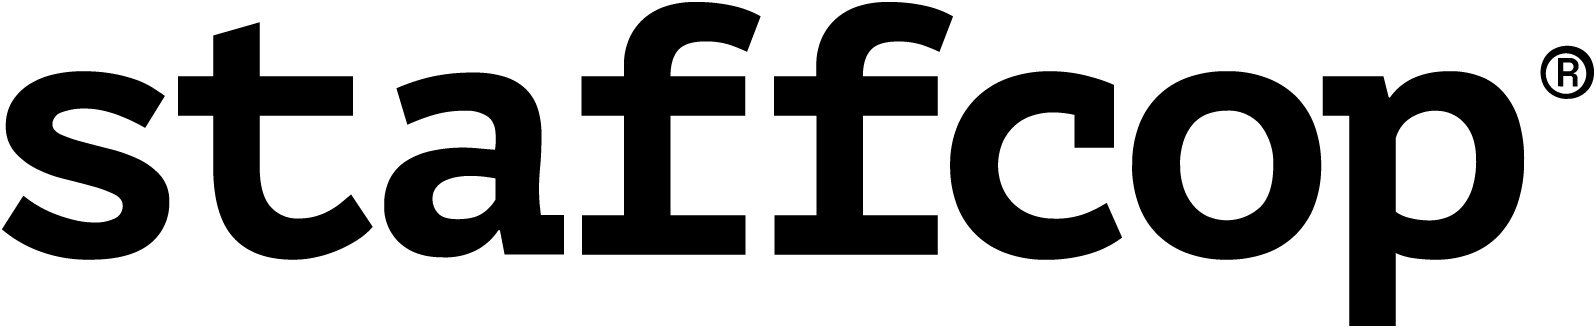 Staffcop logo_black.png